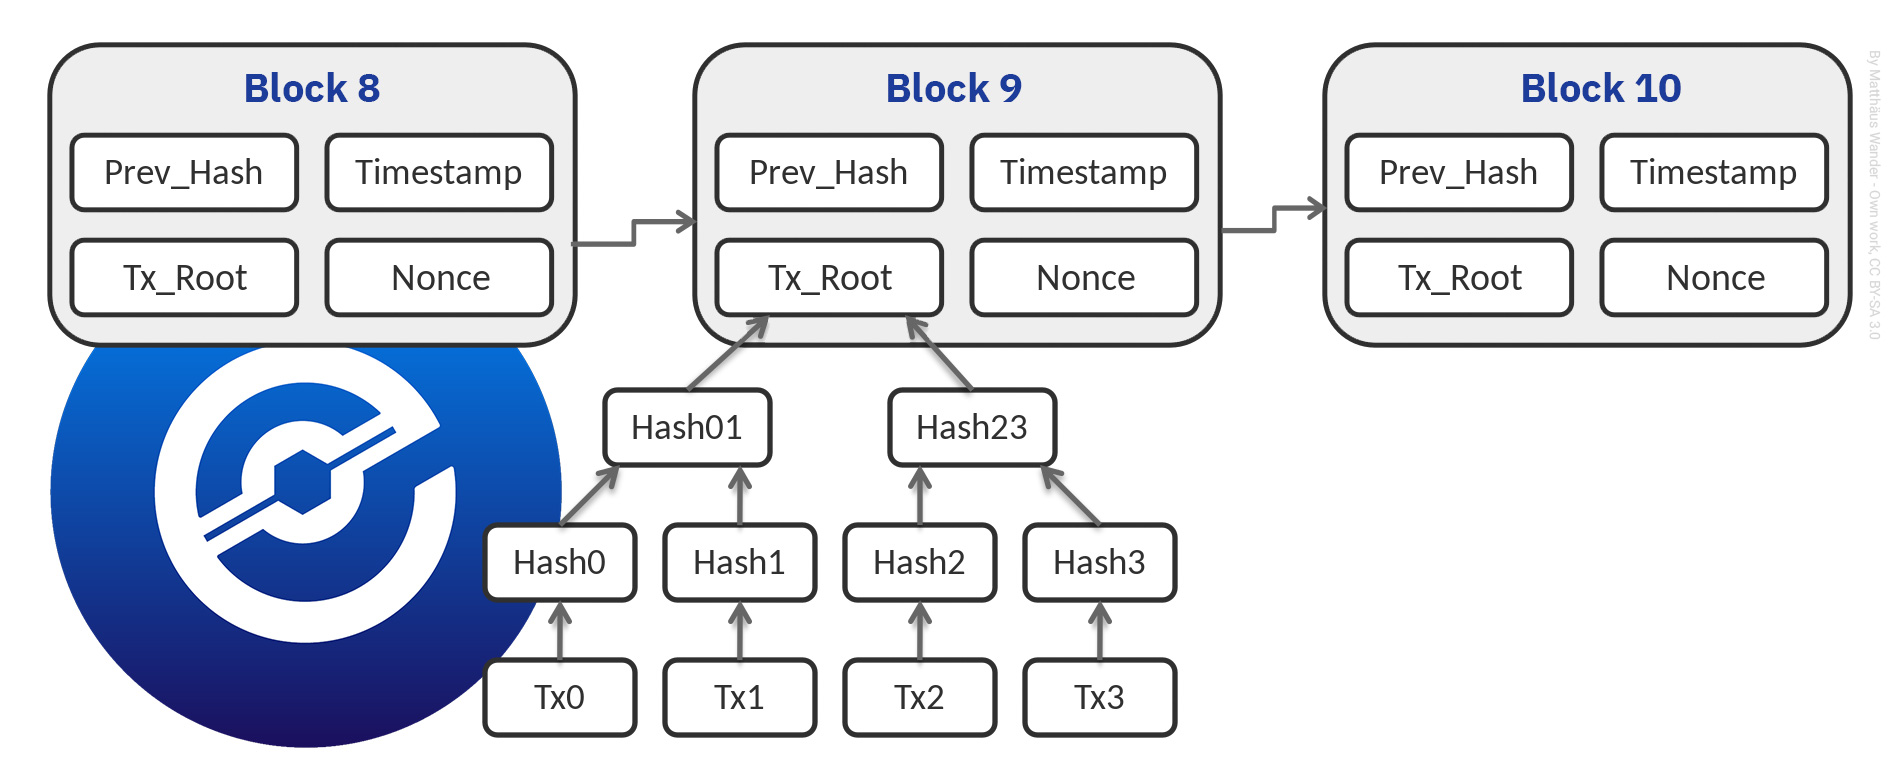 blockchain definition - How blockchain works - XEP explanation - Electra Protocol network